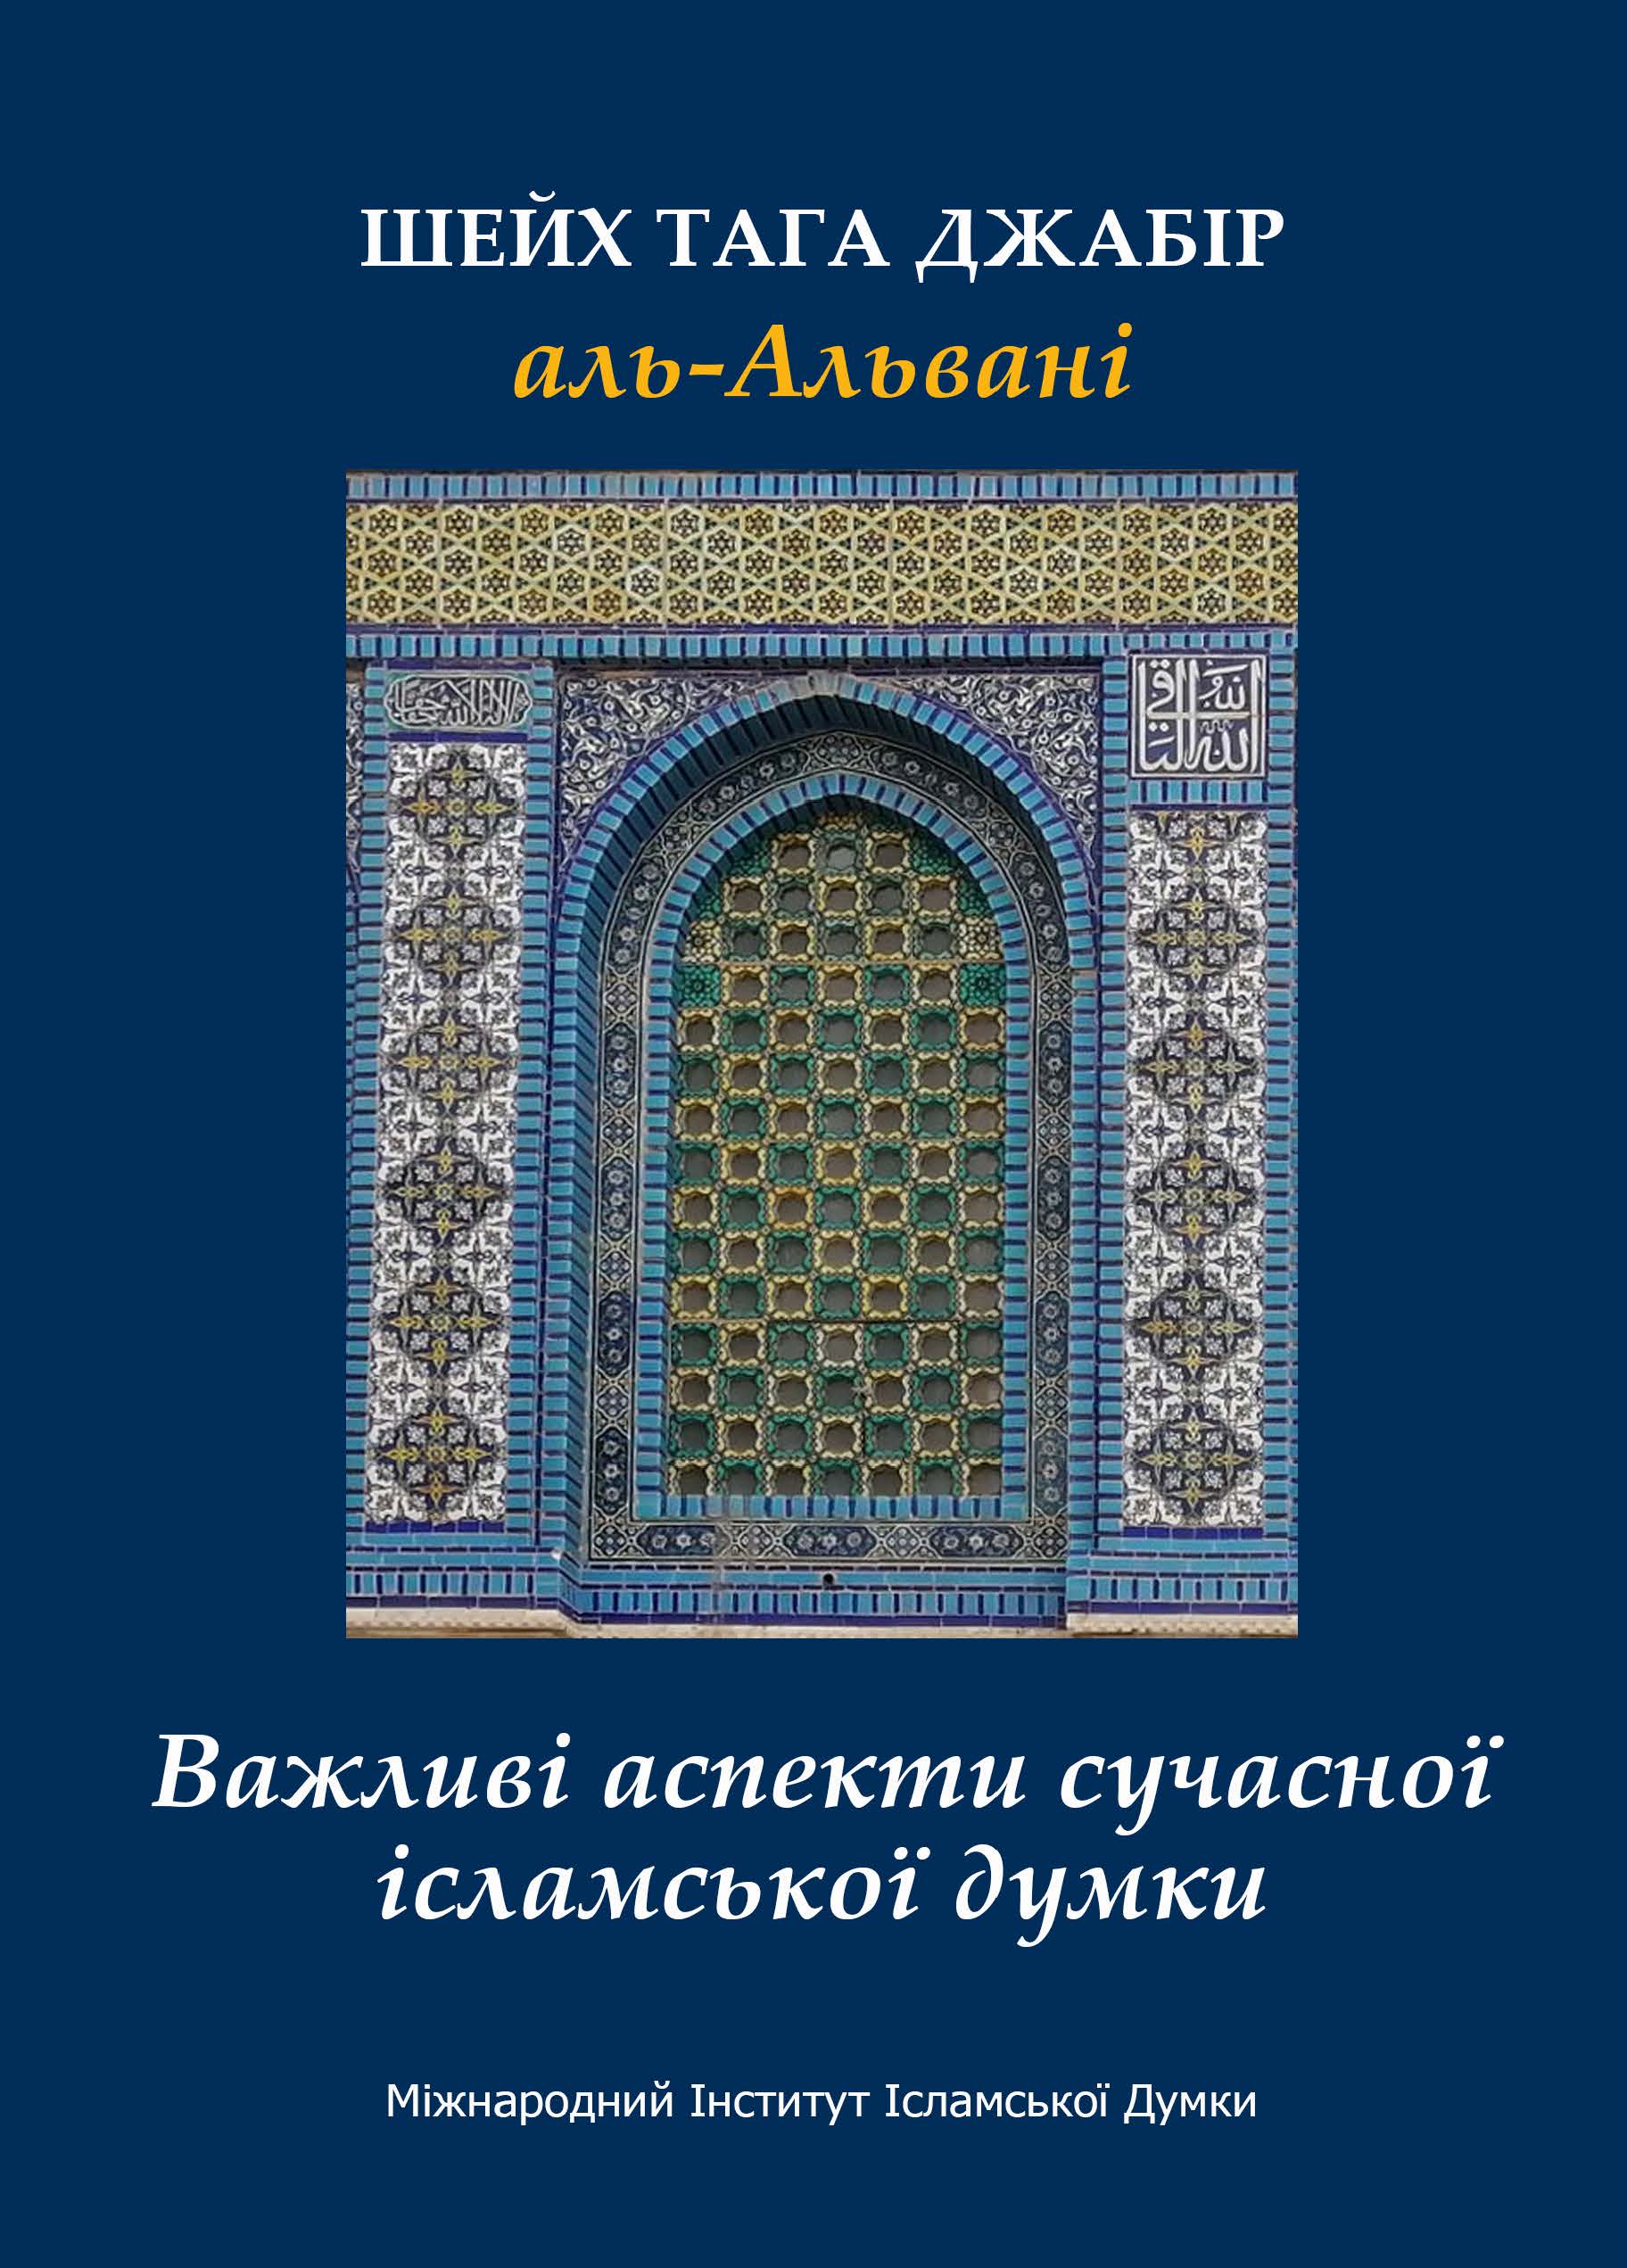 Ukrainian: Важливі аспекти сучасної ісламської думки (Issues in Contemporary Islamic Thought)